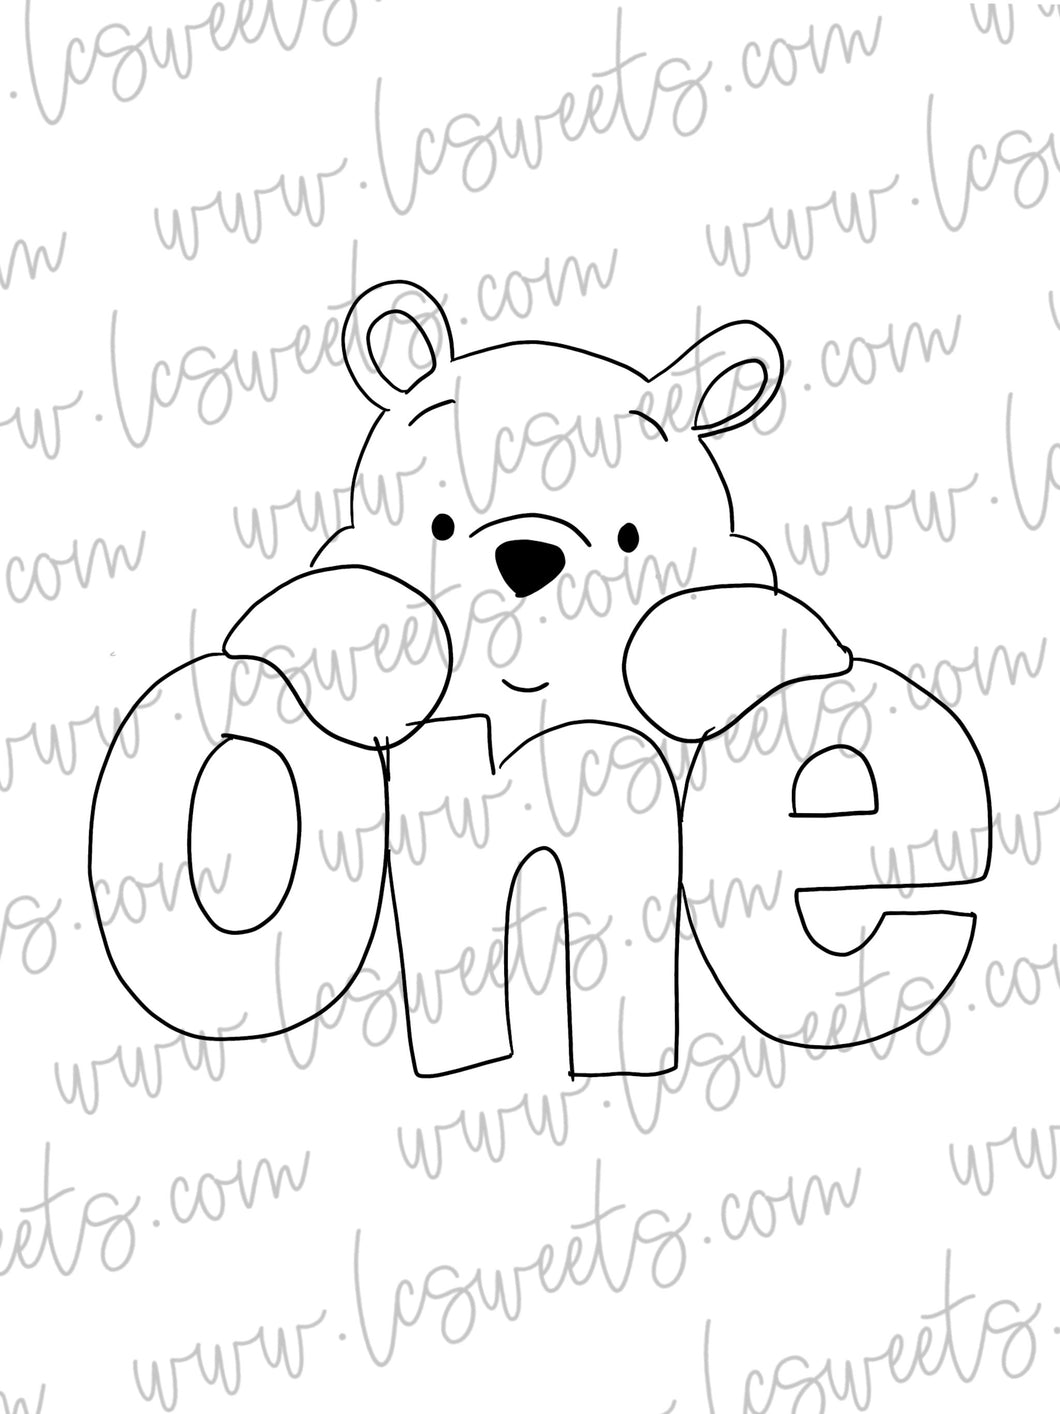 One Bear